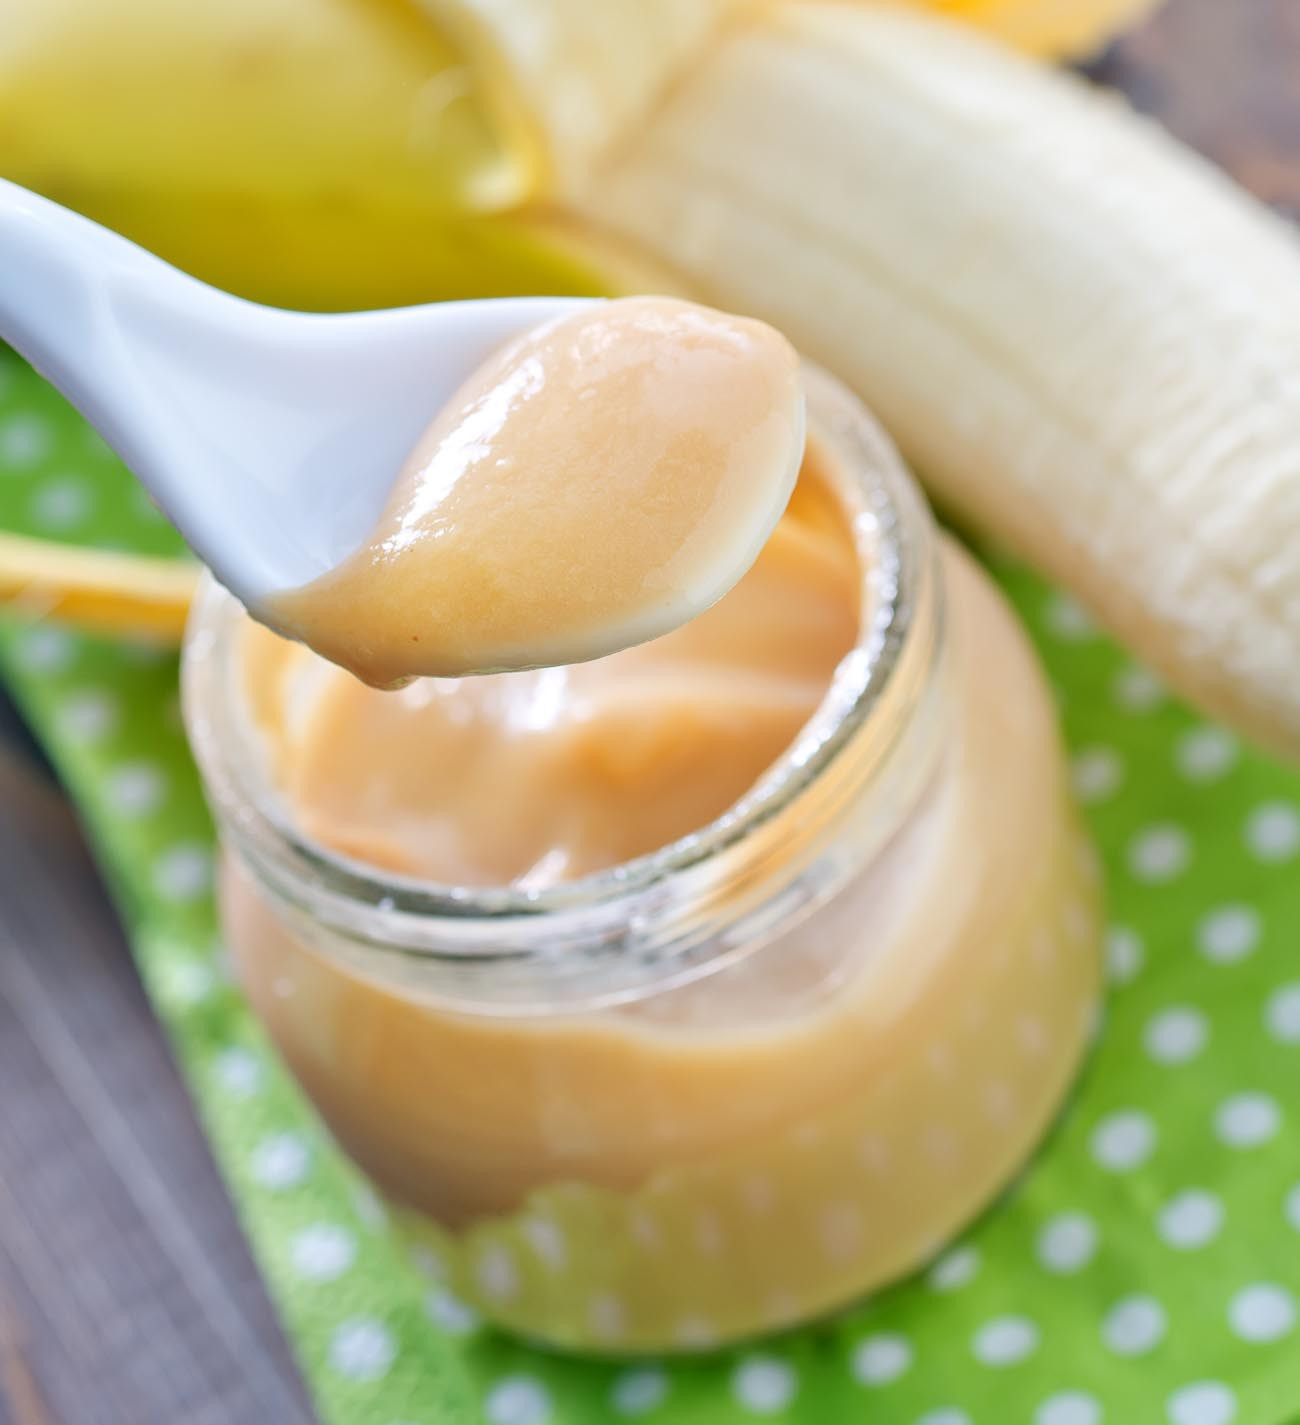 Puree Baby Food Recipes
 Banana Puree Baby Food 4 months onward by Archana s Kitchen